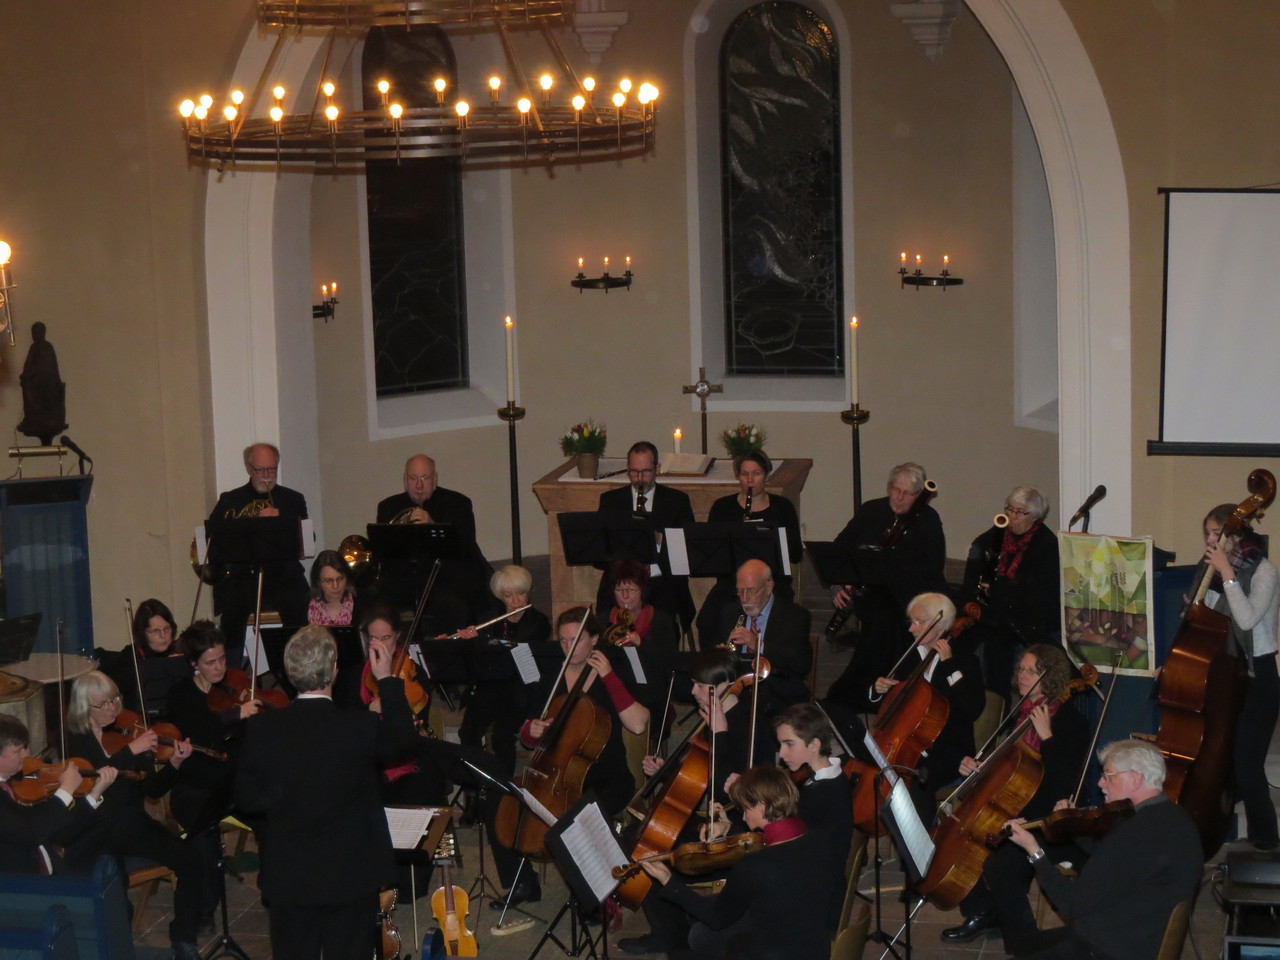 Das Kammerorchester aus Ottersberg begeisterte das Publikum.
Foto: Elke Keppler-Rosenau